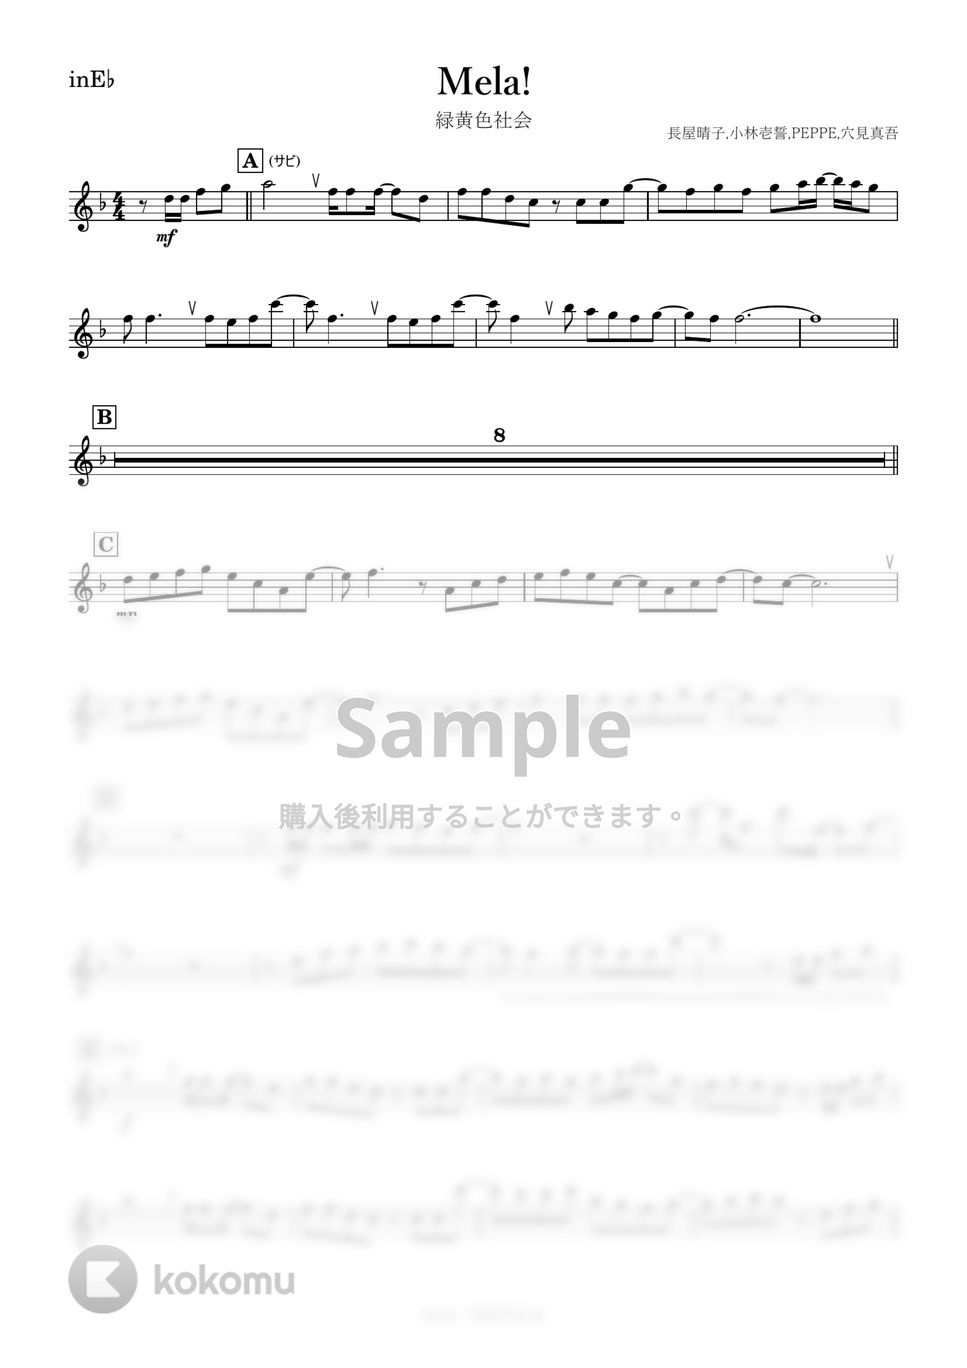 緑黄色社会 - Mela! (E♭) by kanamusic